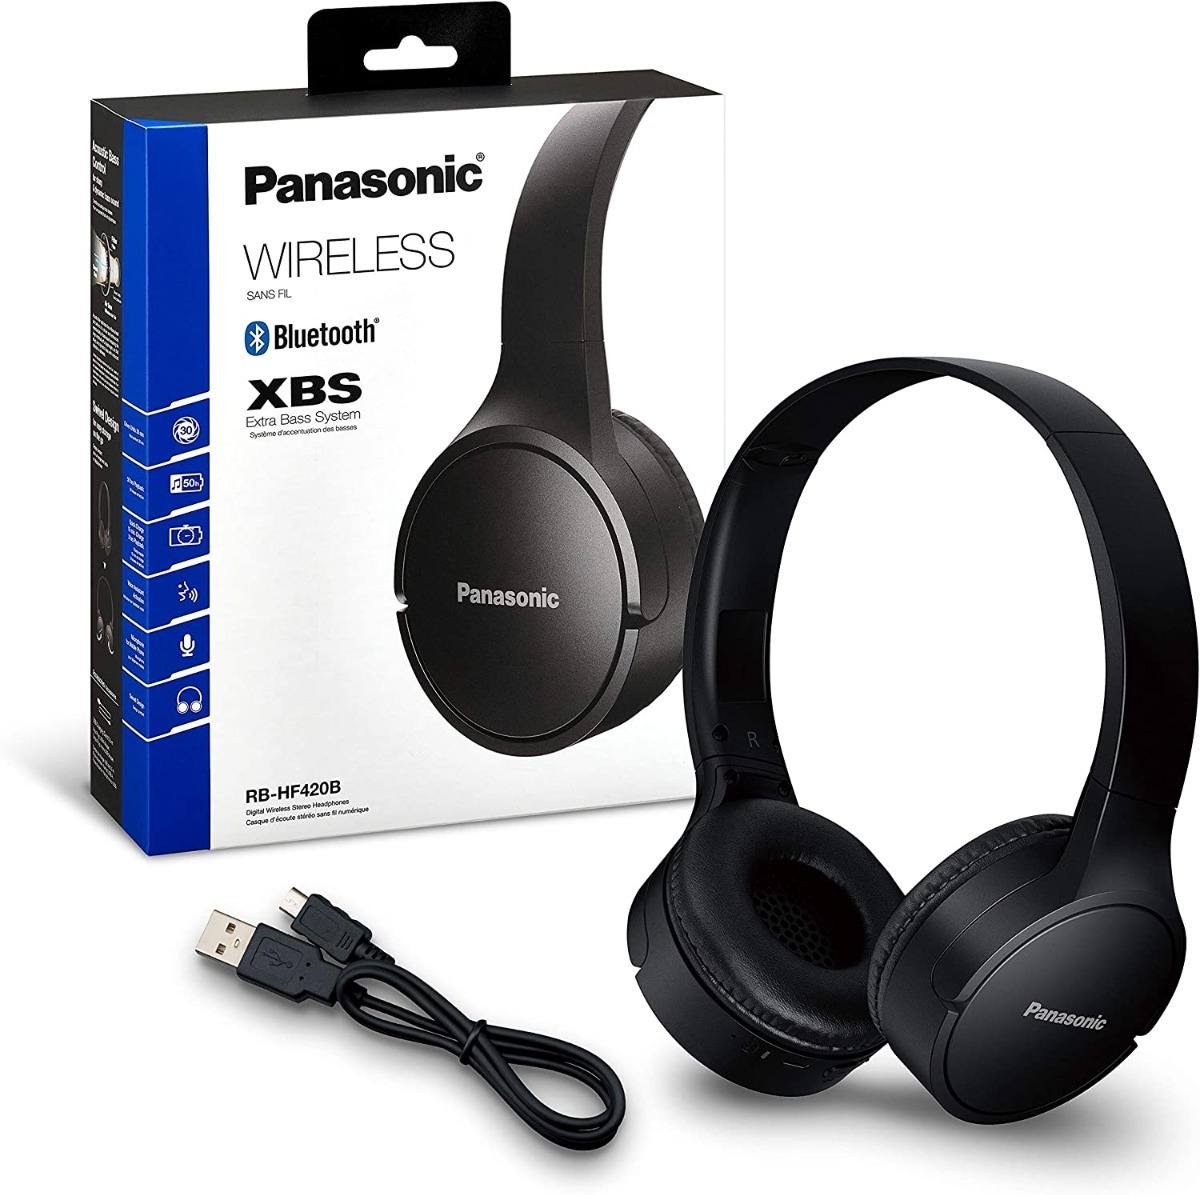 Audifonos Panasonic Bluetooth Hf420b Extra Bass 50hrs Mic | Mercado Libre